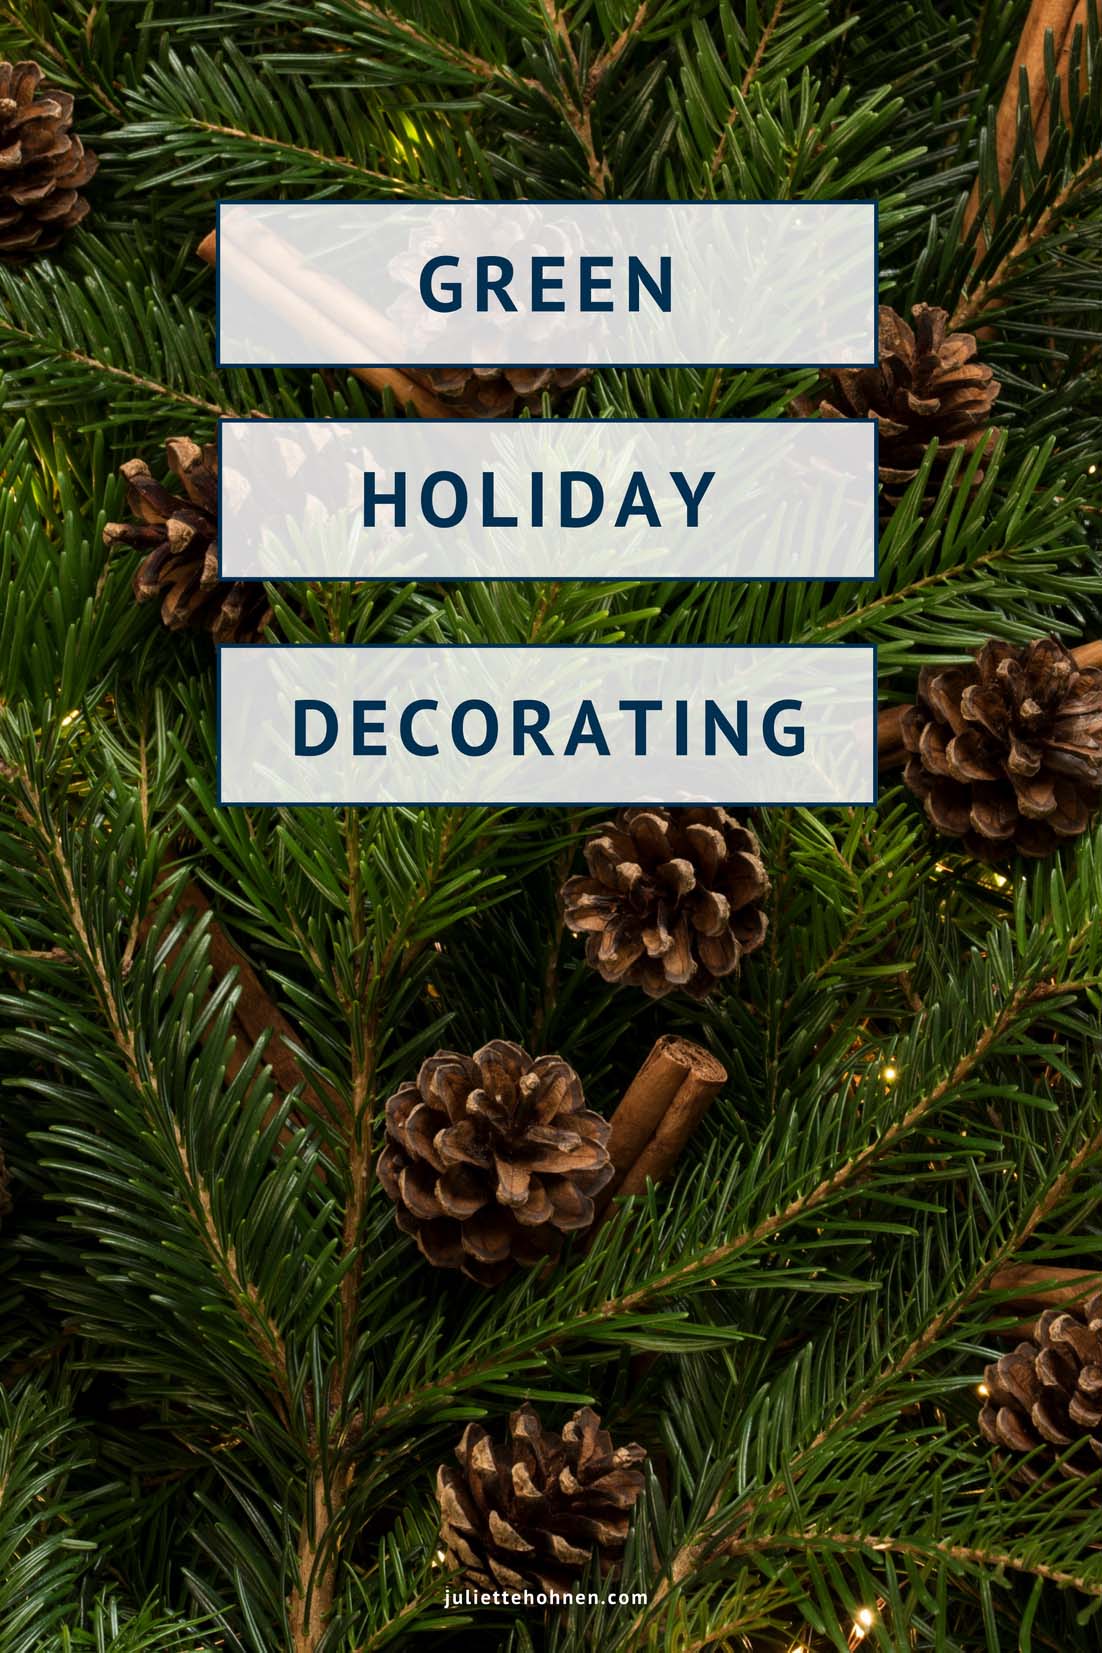 Green Holiday Decorating